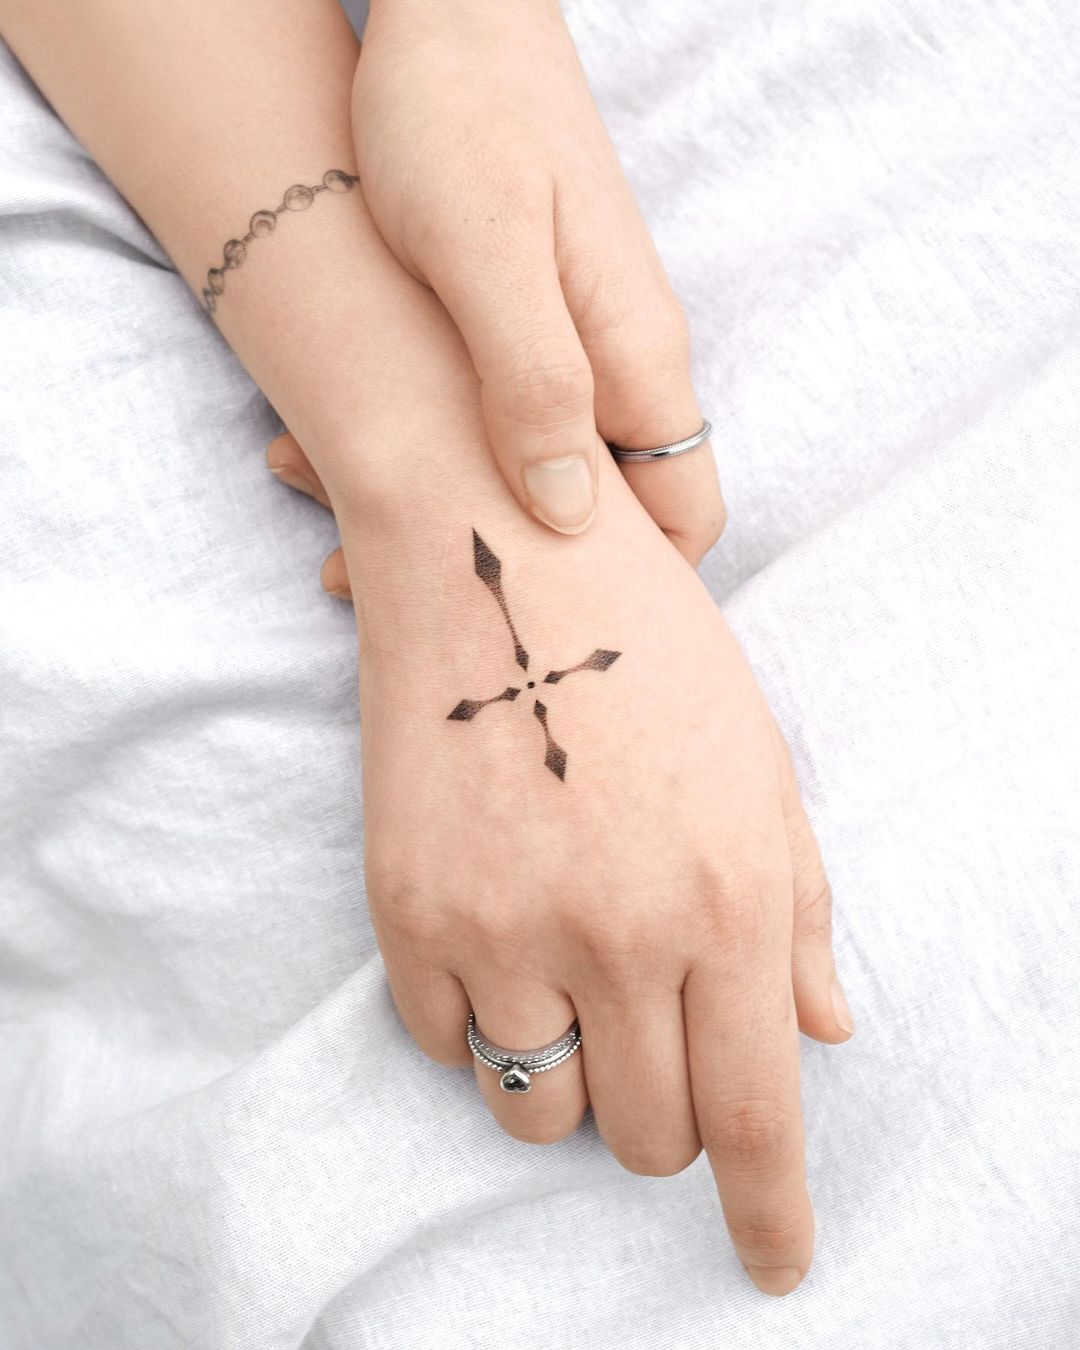 Minimalist Cross Tattoo On The Hand